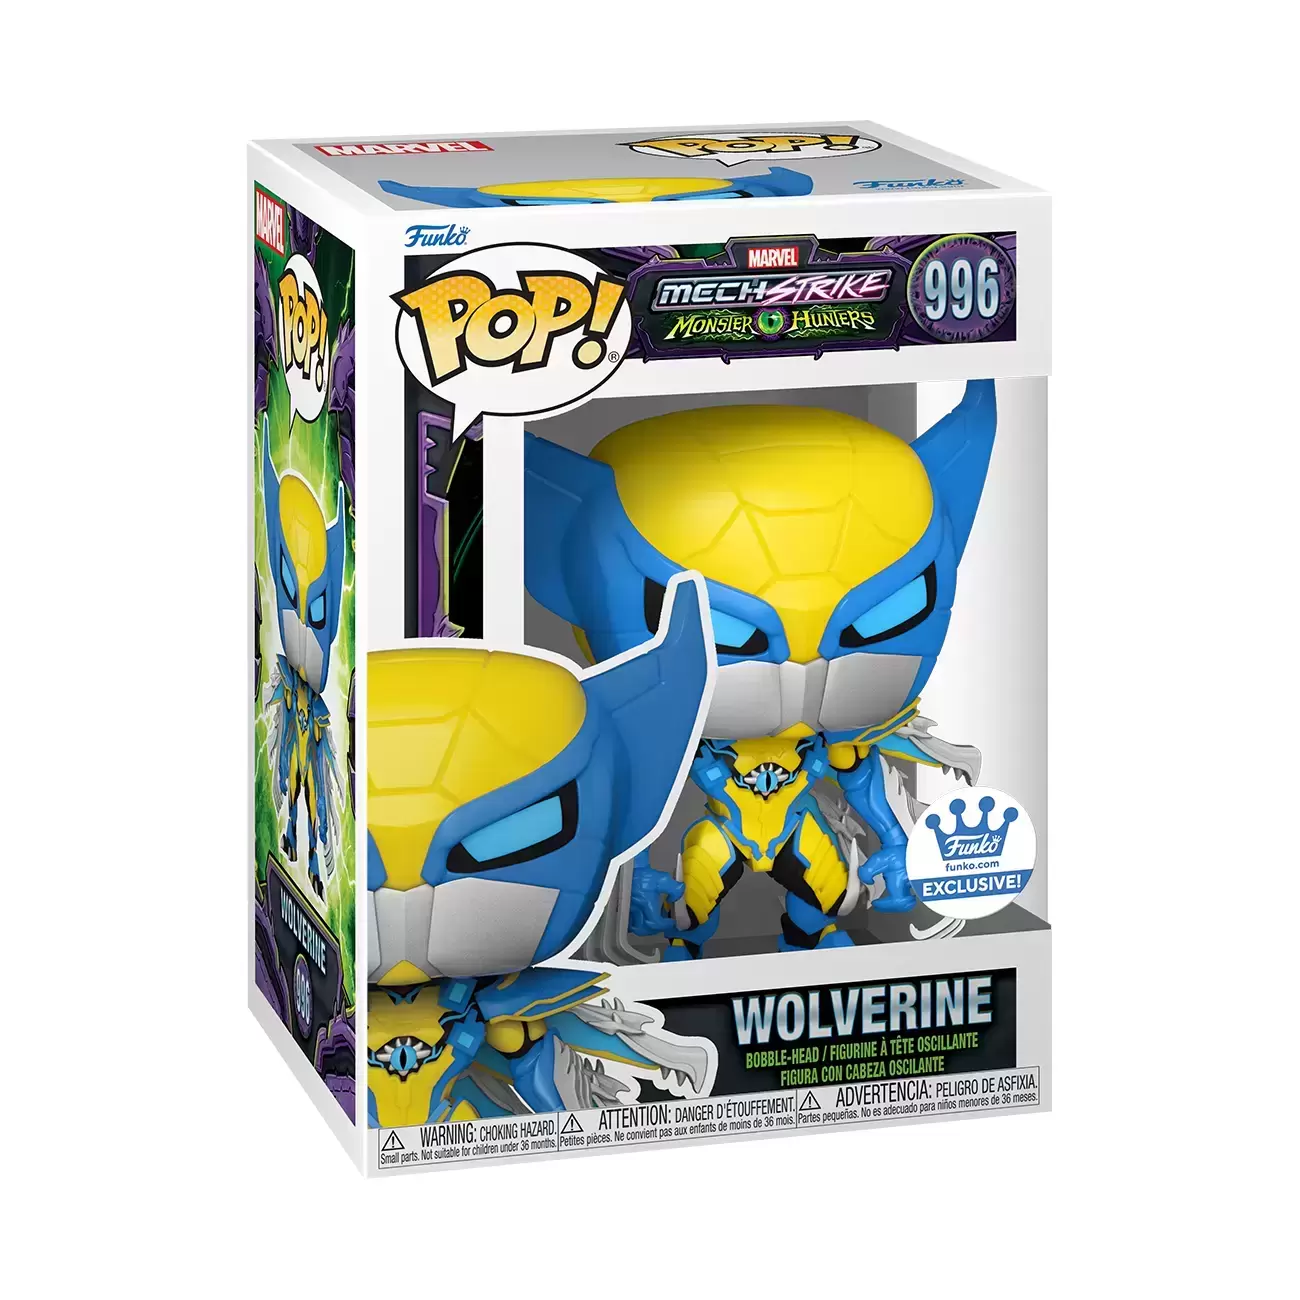 POP! MARVEL - MechStrike Monster Hunters - Wolverine